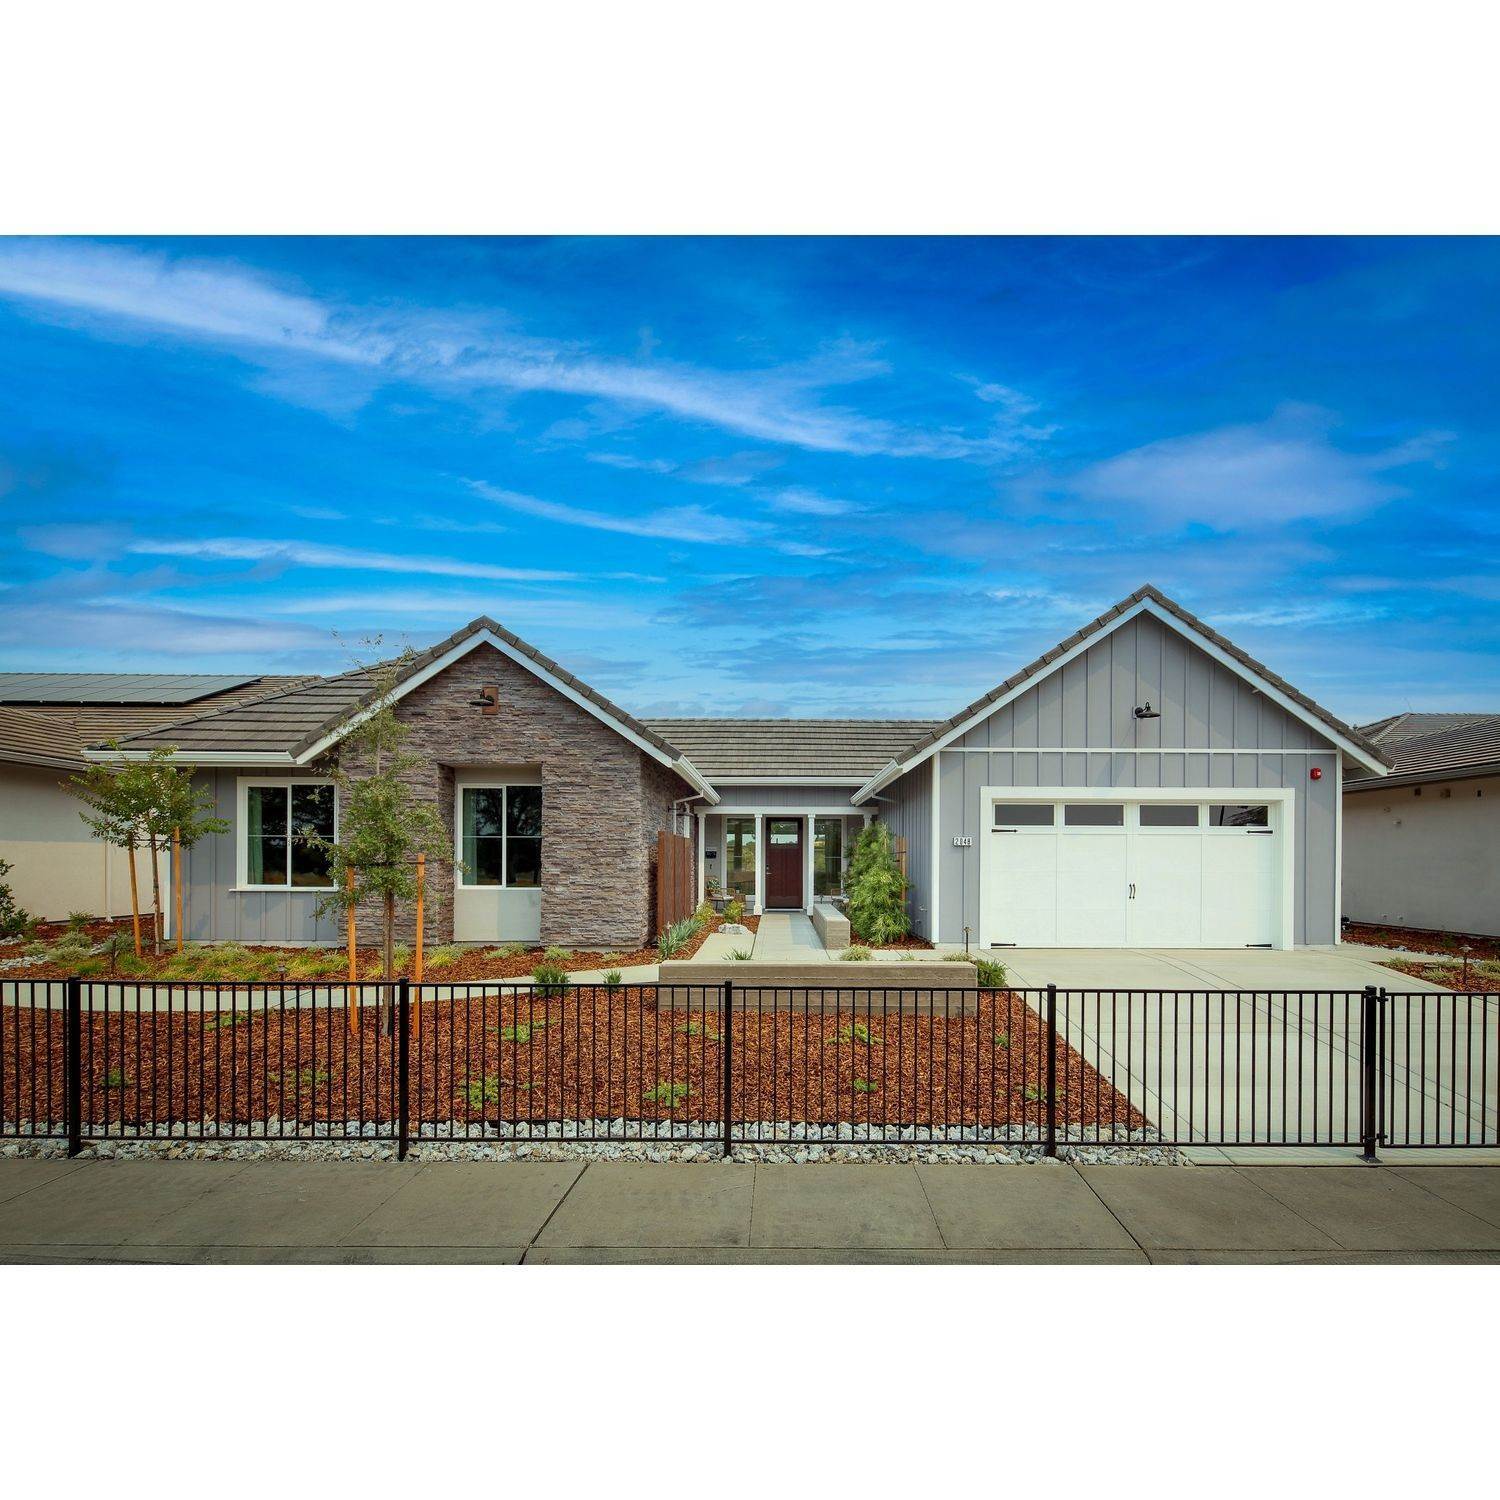 5. Turkey Creek Estates building at 2036 Pinehurst Drive, Lincoln, CA 95648